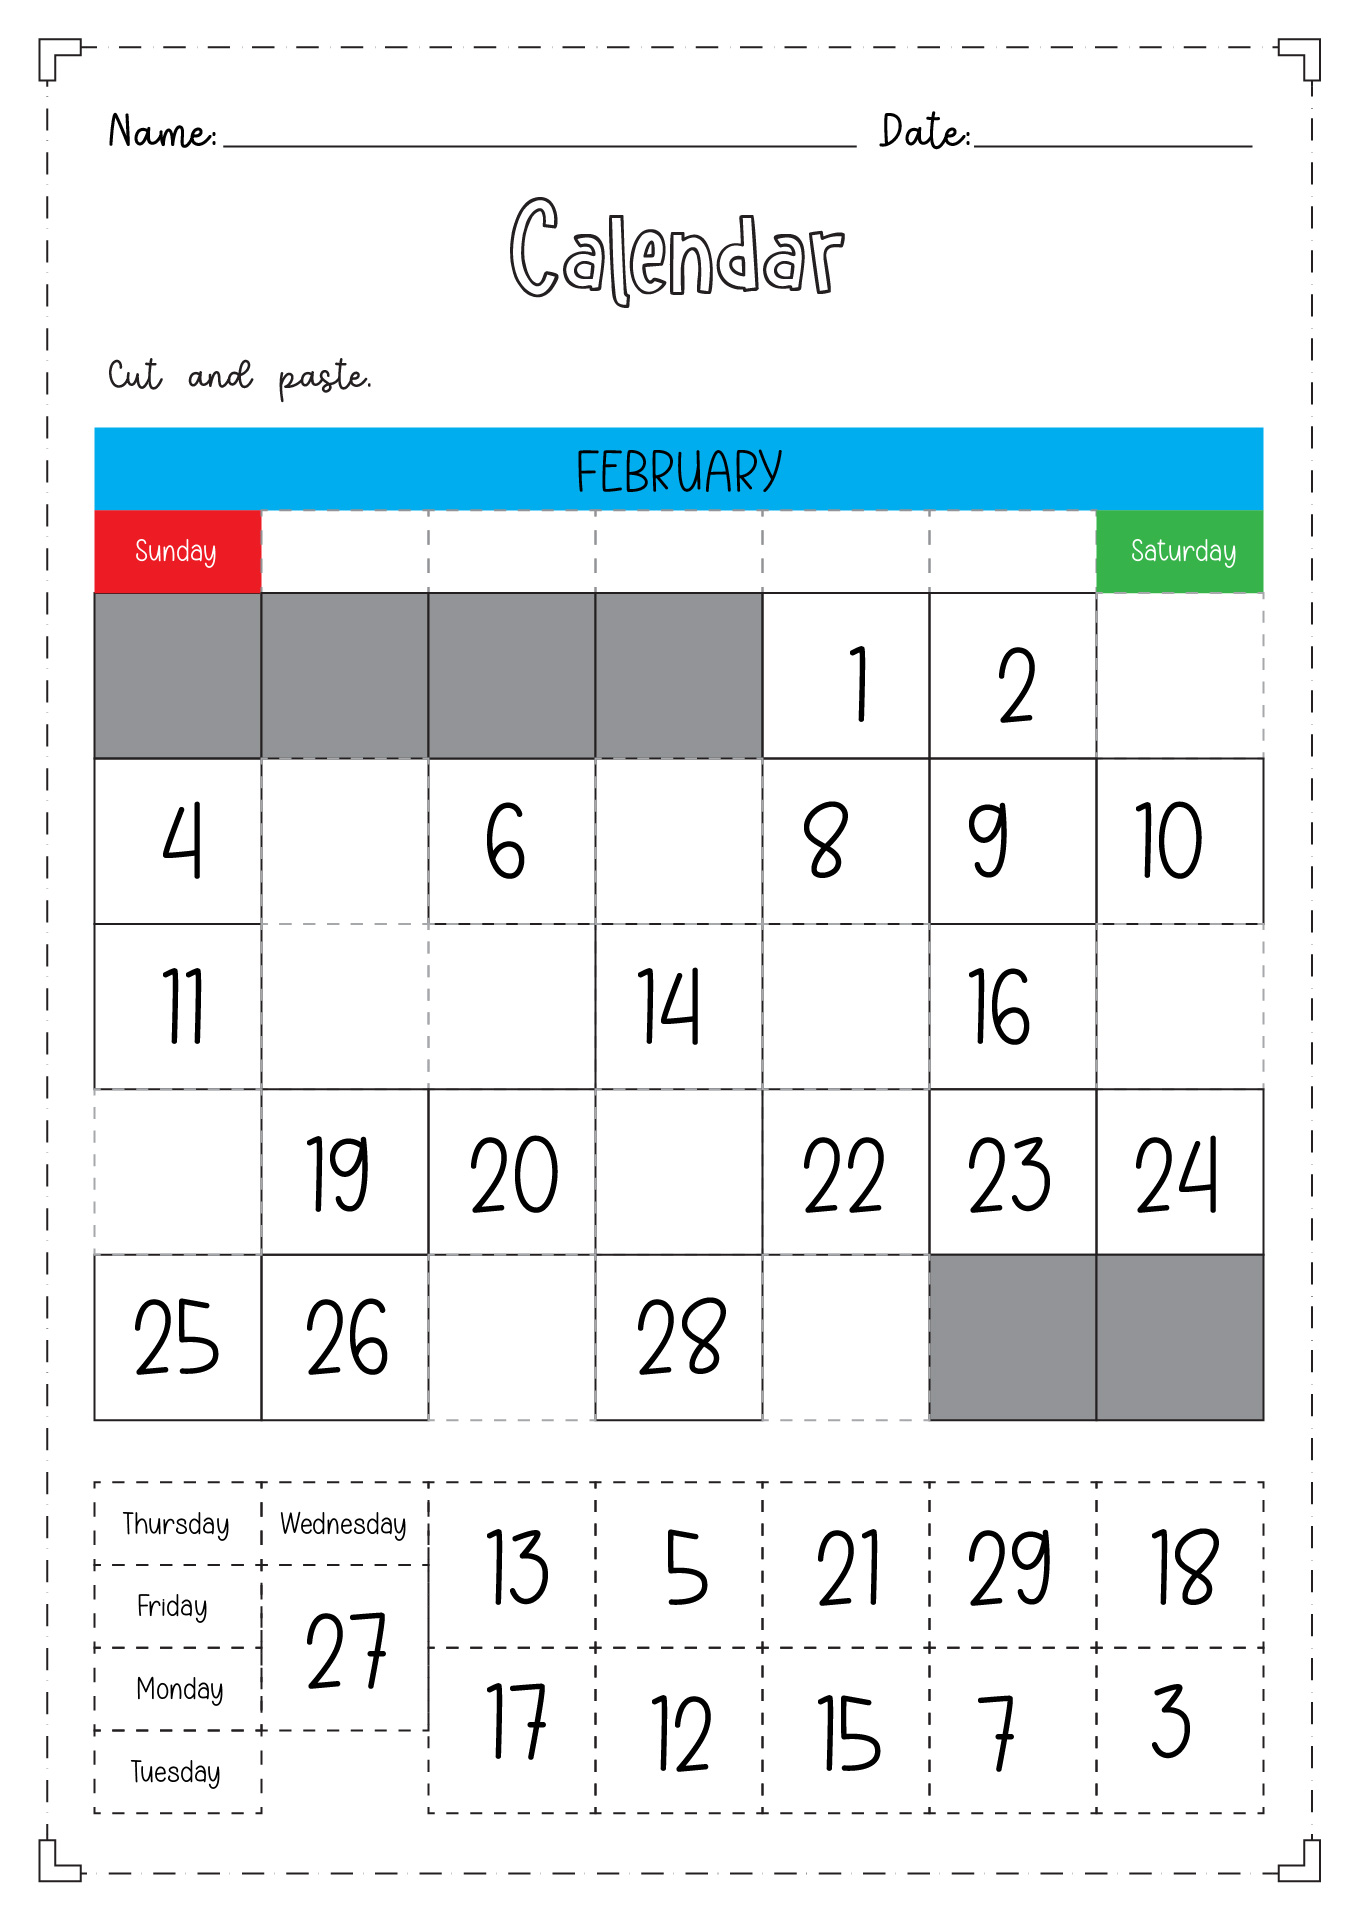 Calendar Cut and Paste Worksheets Image